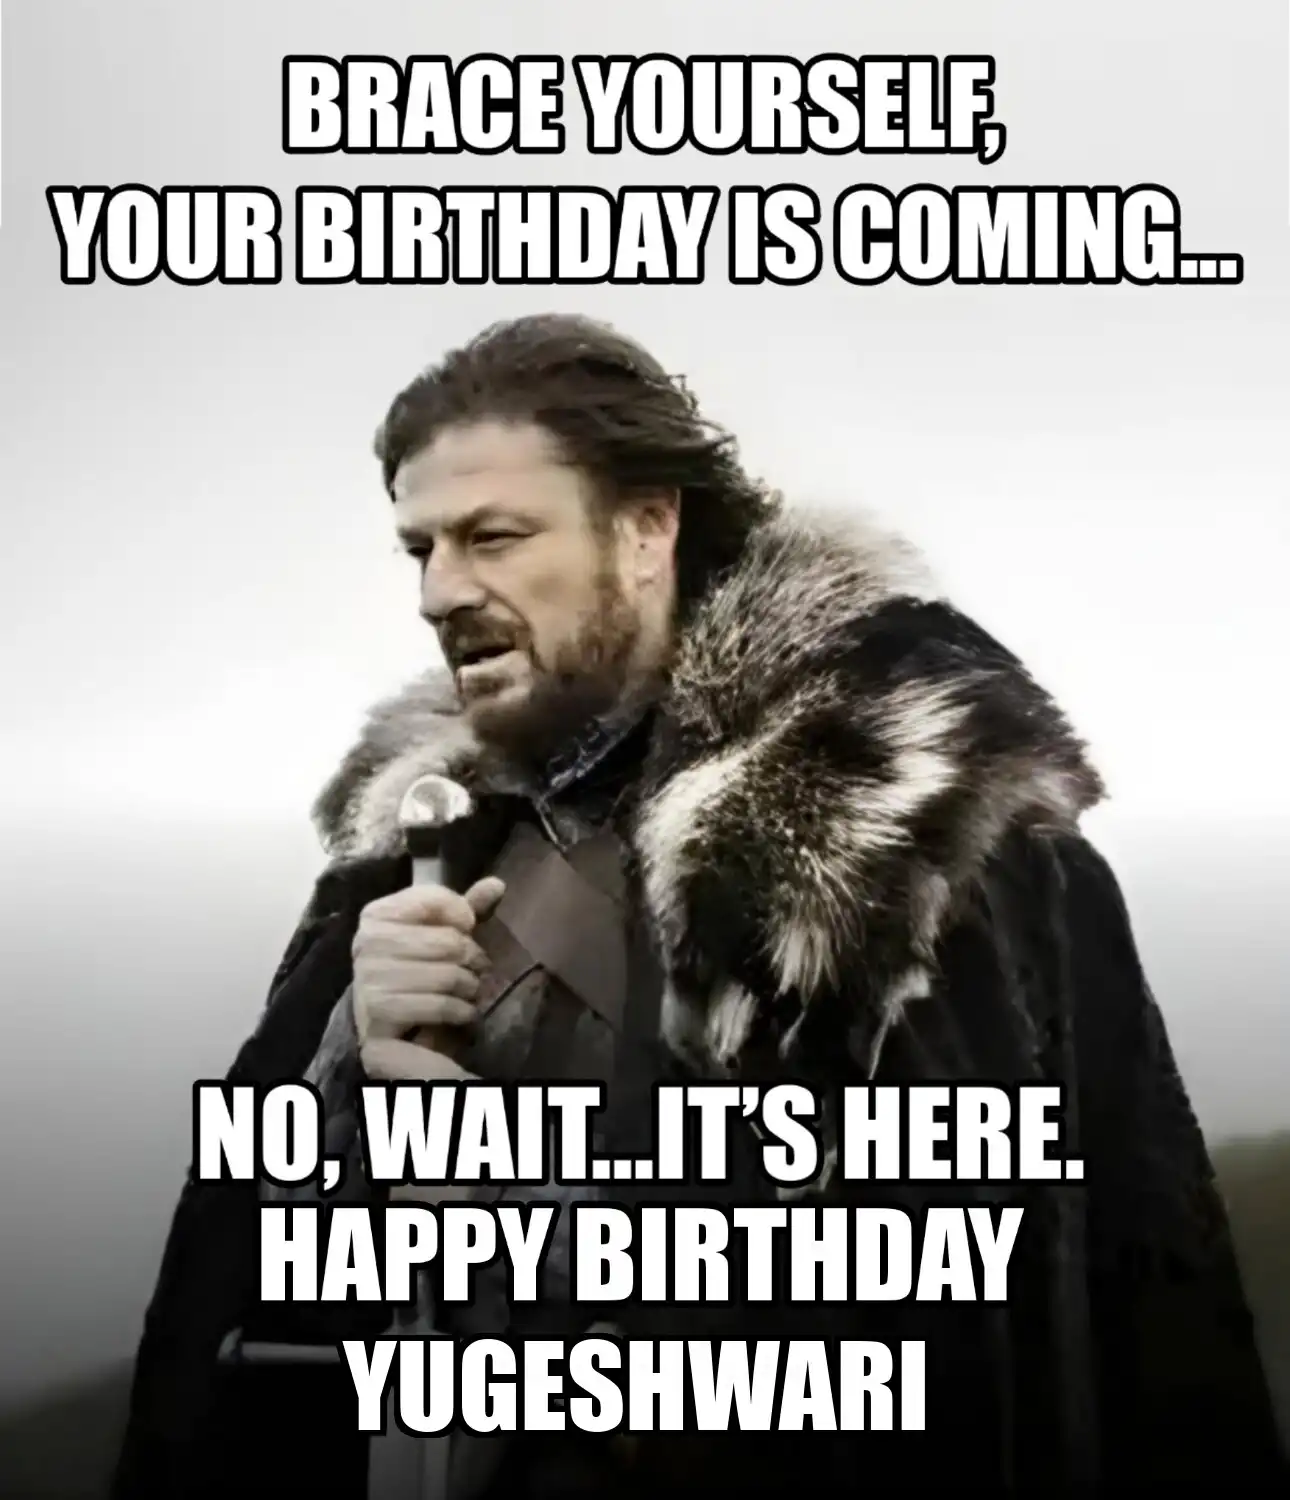 Happy Birthday Yugeshwari Brace Yourself Your Birthday Is Coming Meme